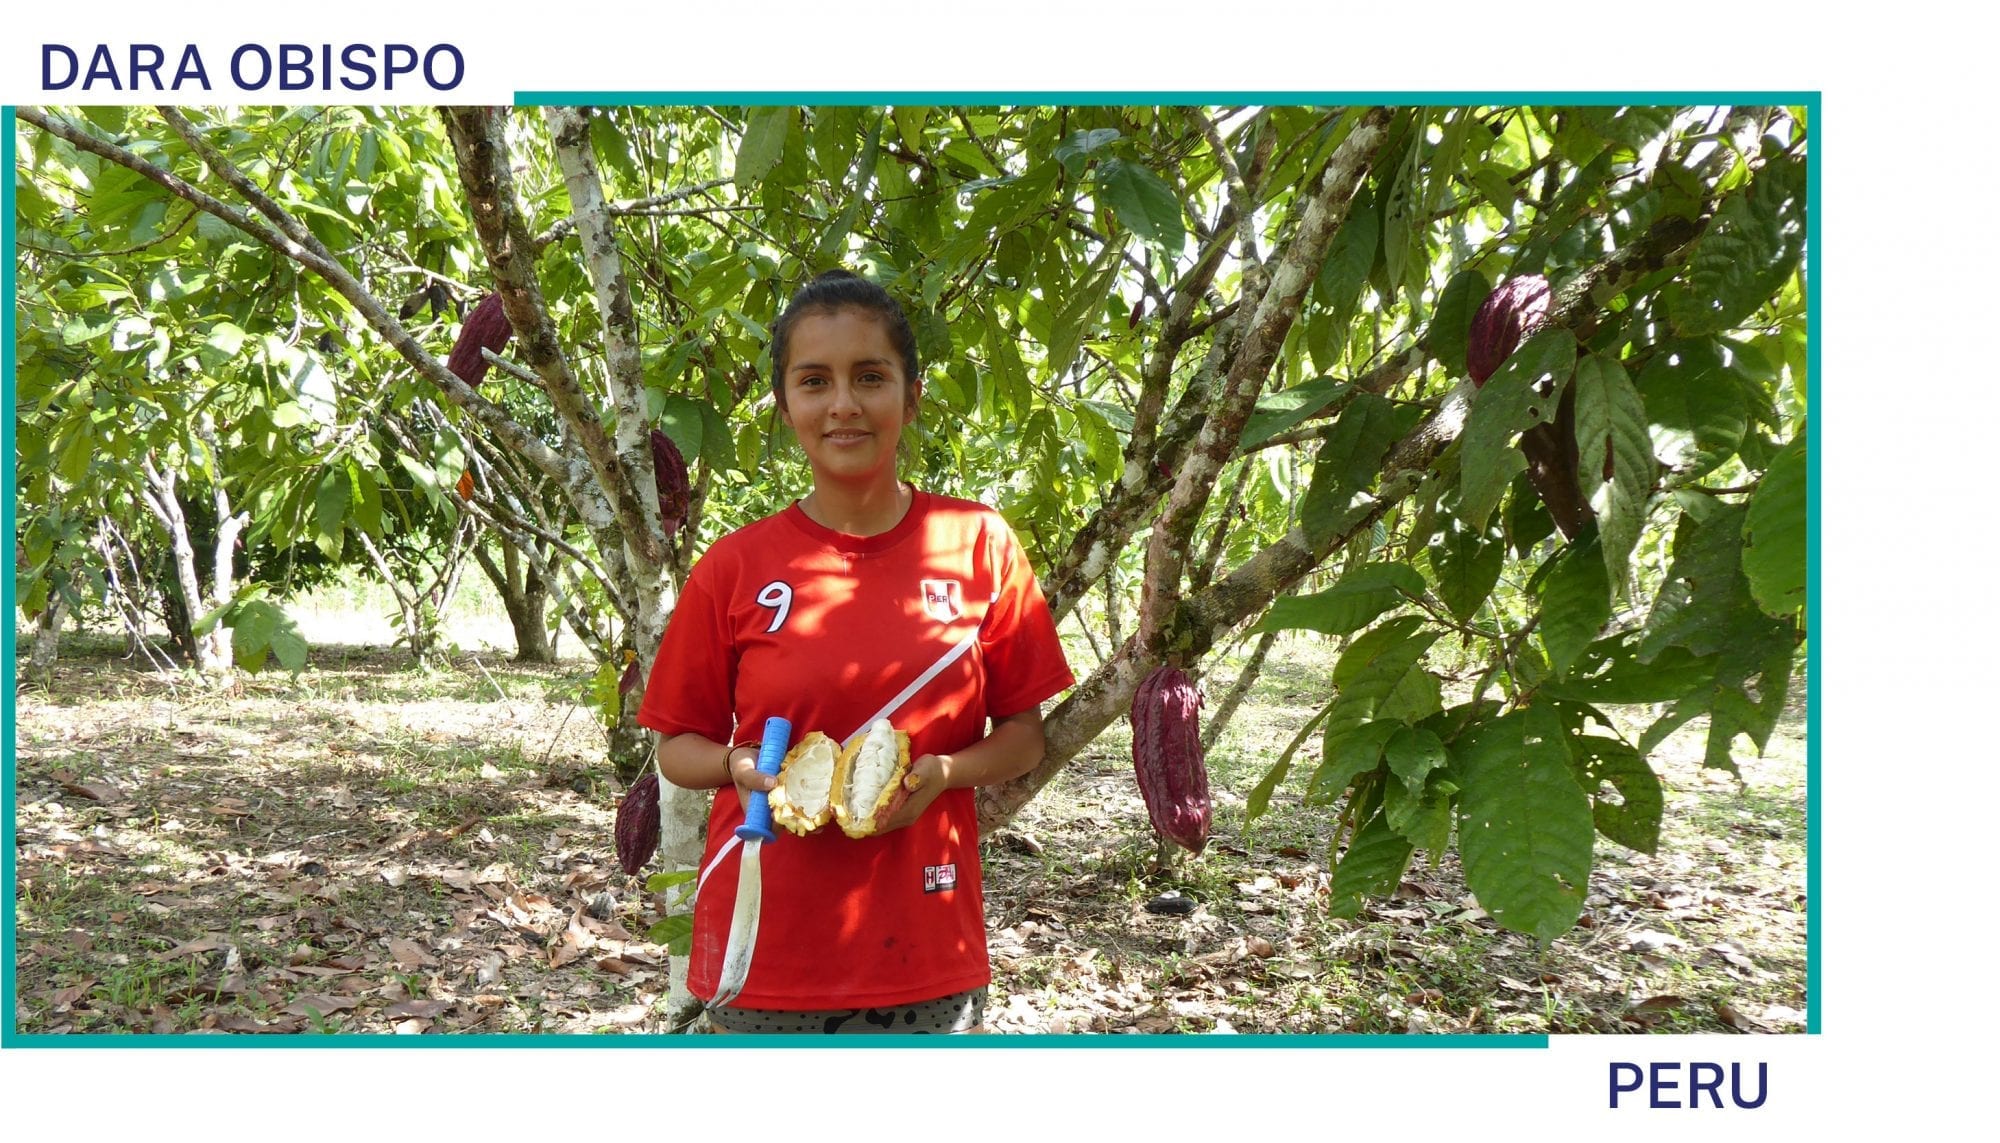 Dara Obispo stands on her cocoa farm in Peru